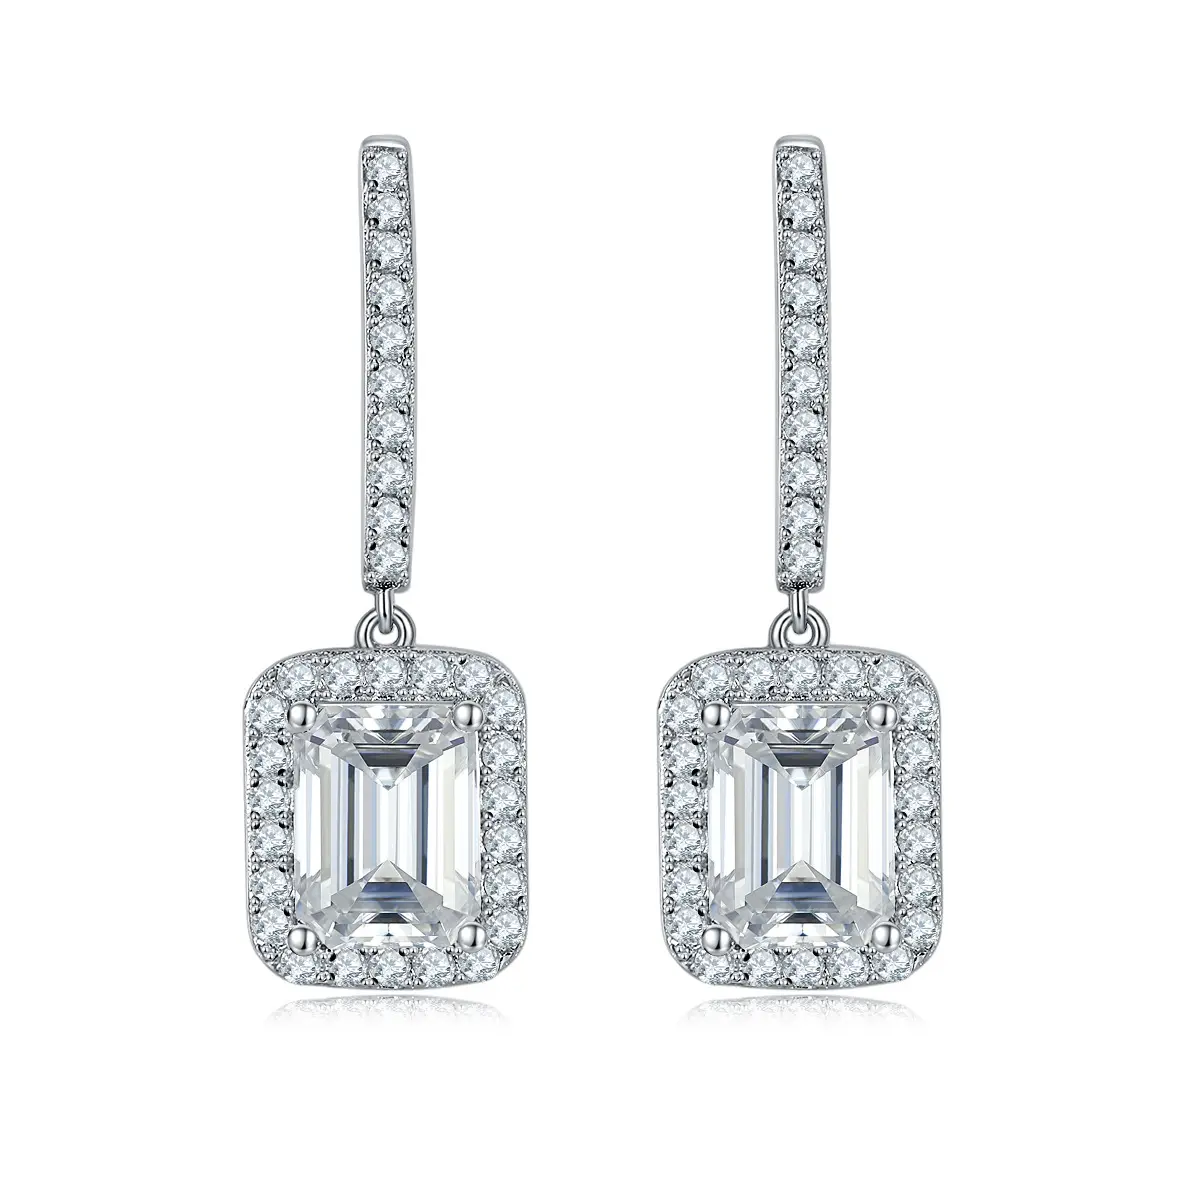 Factory Price Diamonds Loose Moissanite Emeral Cut 8x6mm 2CT 925 Silver White Moissanite Hoop Earrings